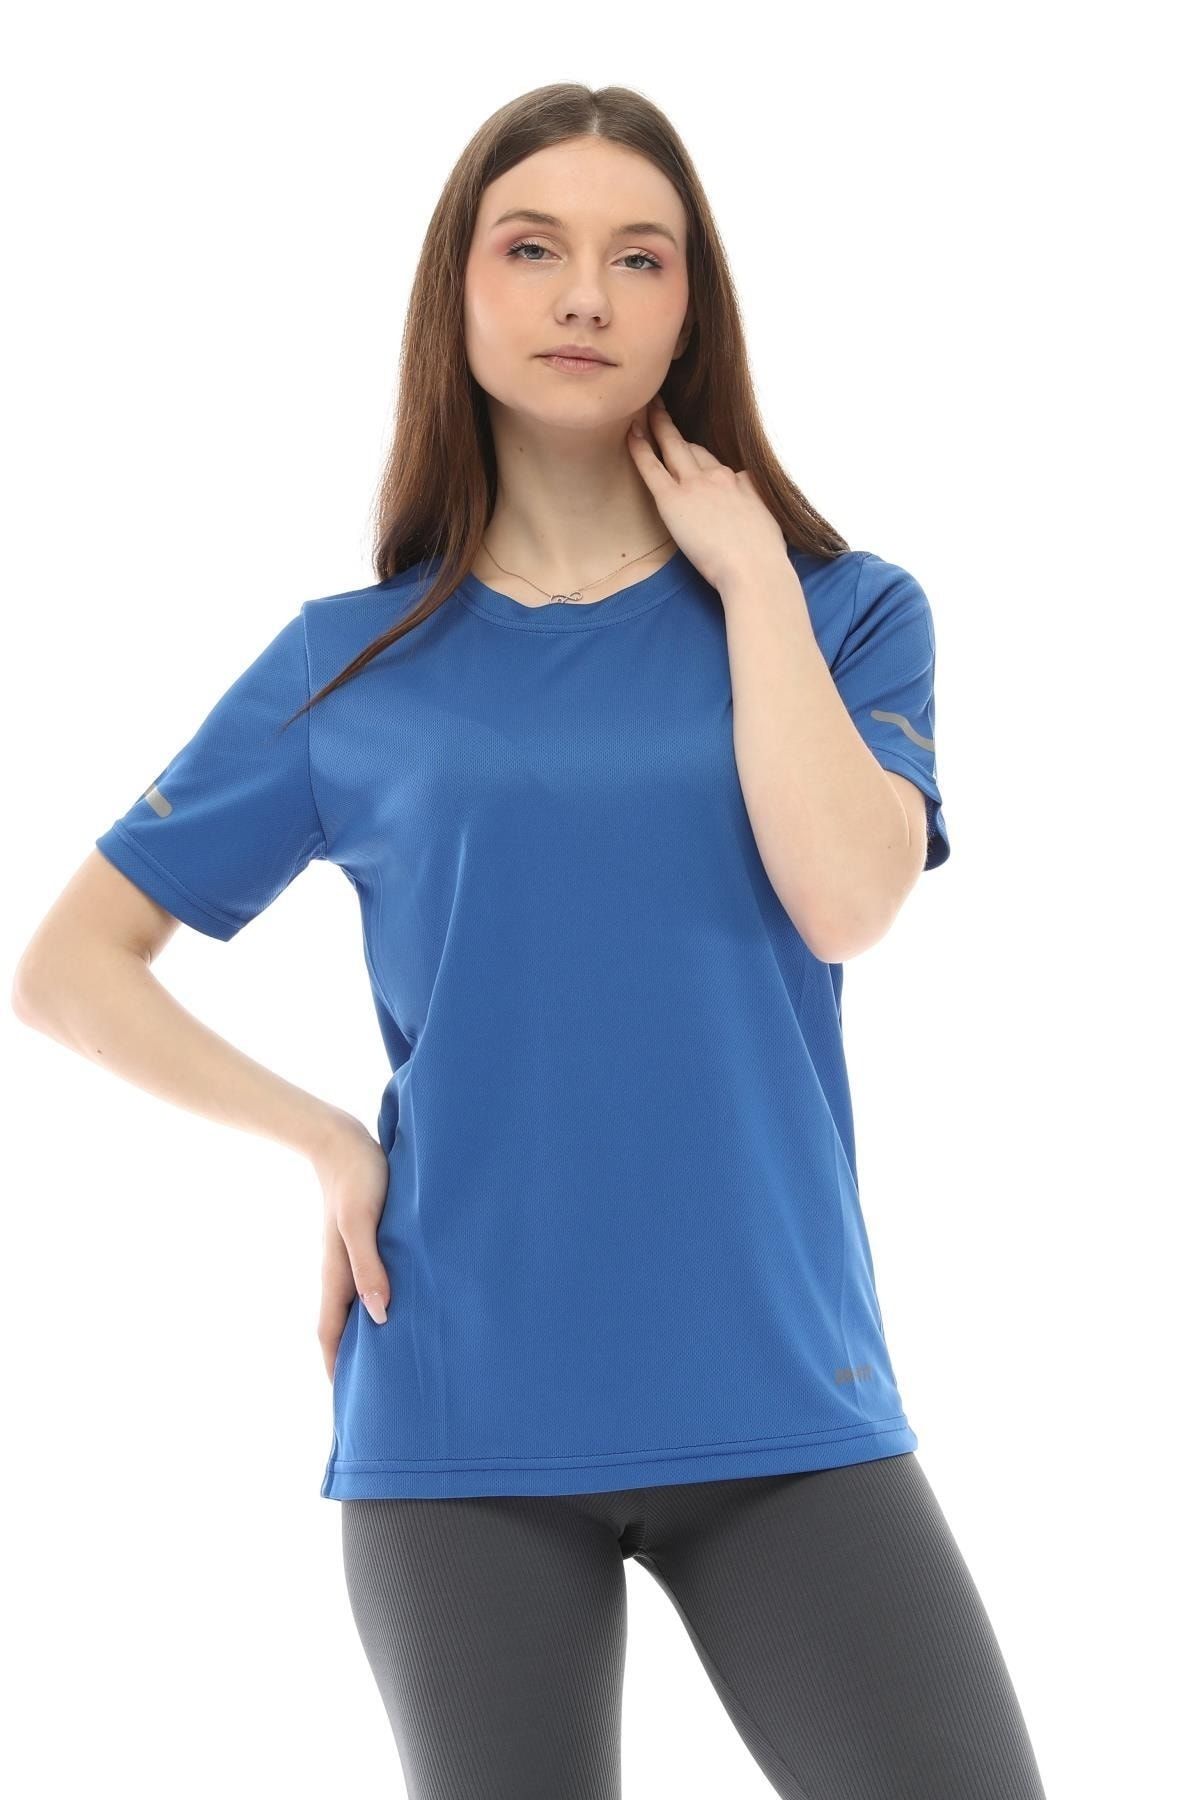  Women's Short Sleeve Moisture Wicking Athletic Shirt